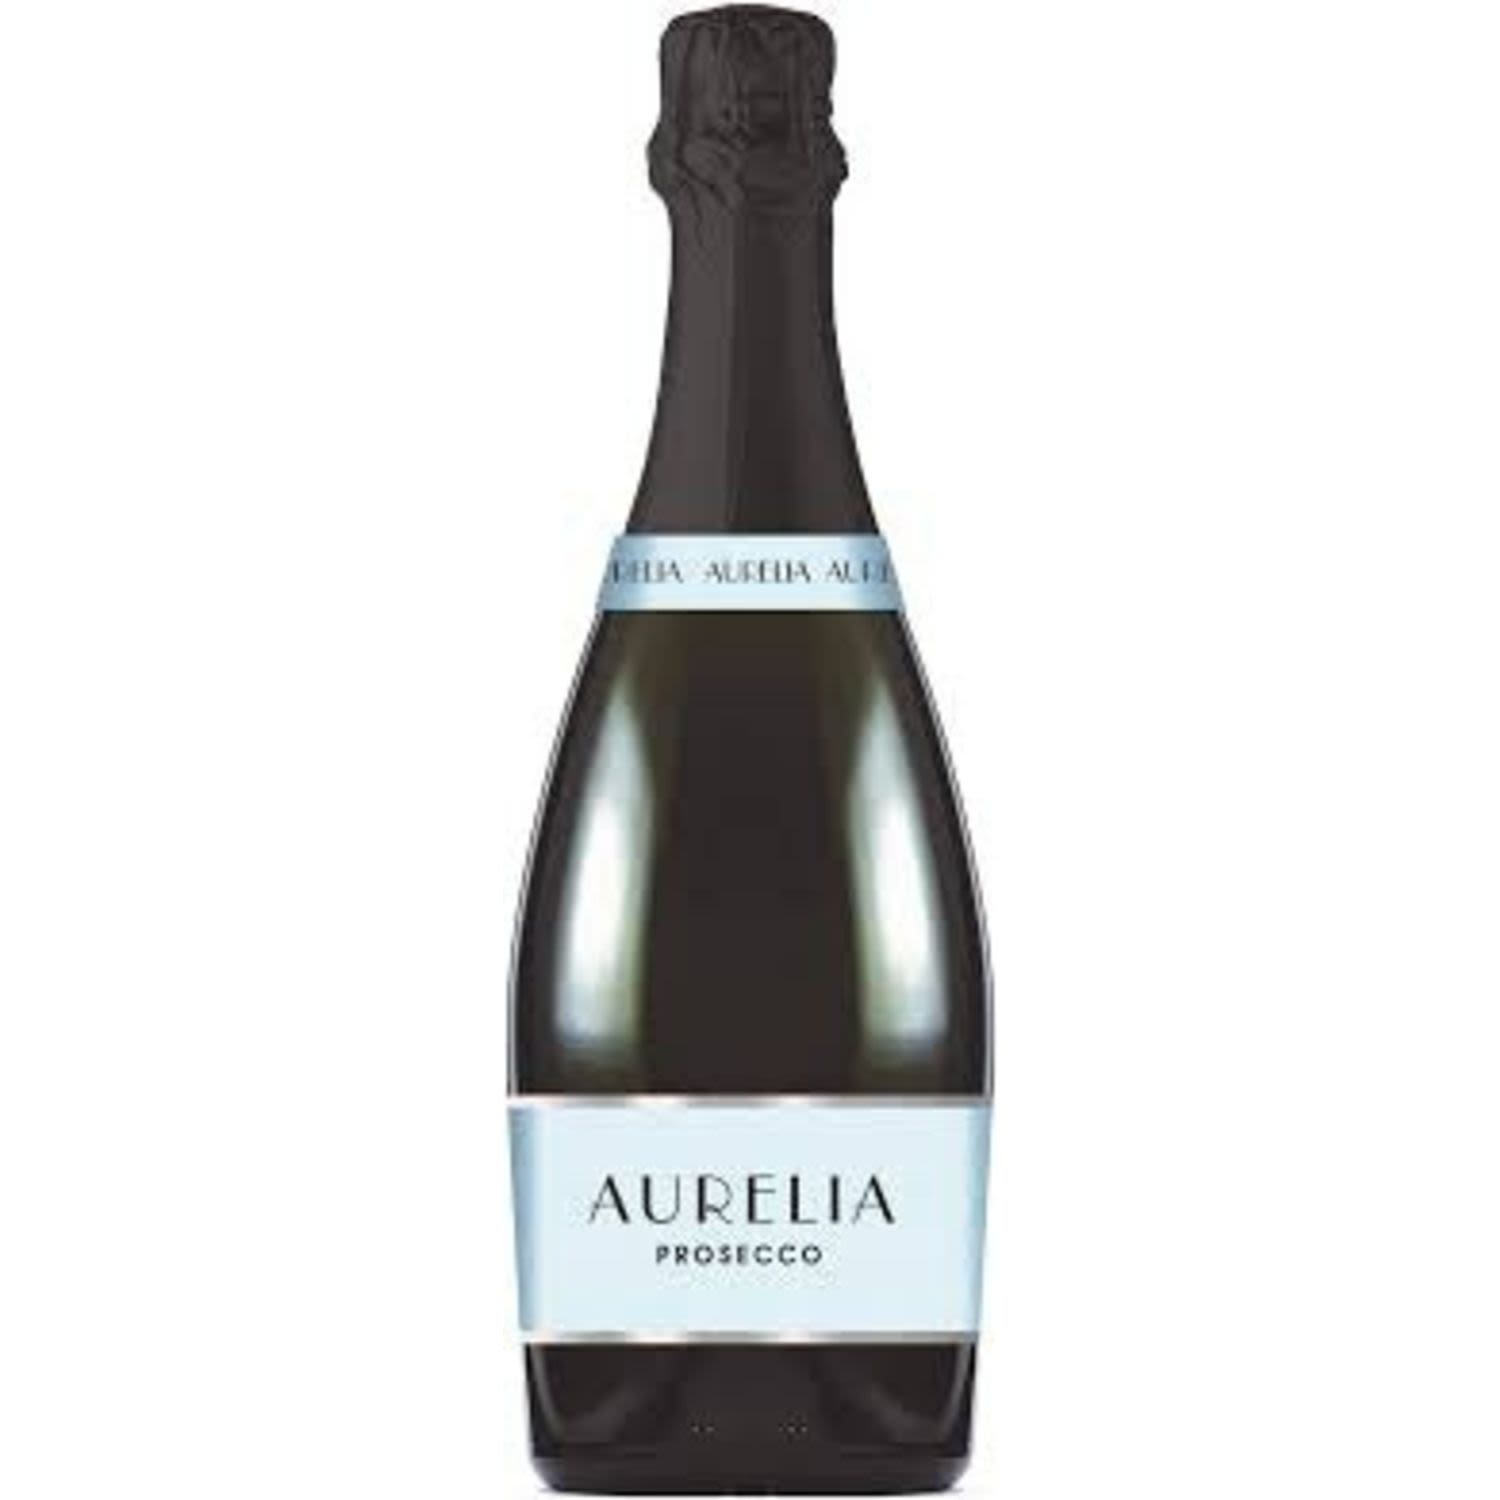 Aurelia Prosecco NV 750mL Bottle